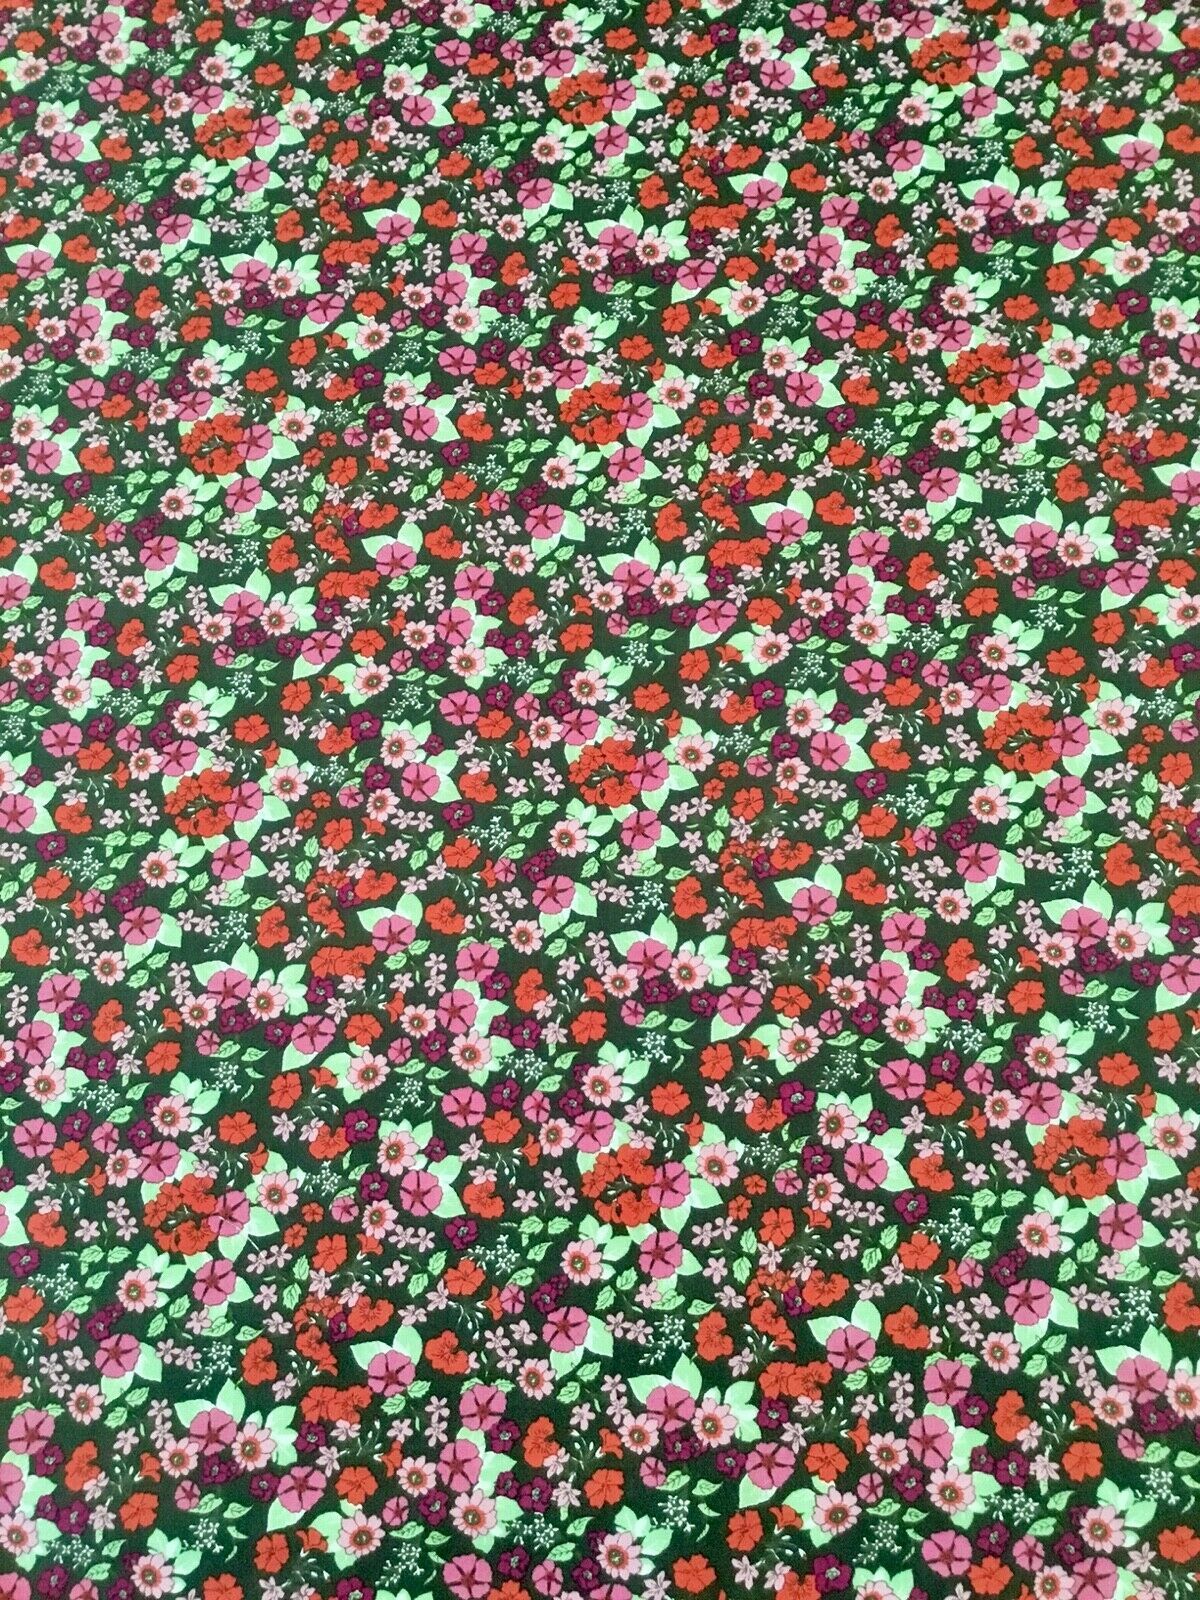 Garden Delights - Impressionist Floral Cotton Fabric on Dk Grn background 1/2 yd - $4.55